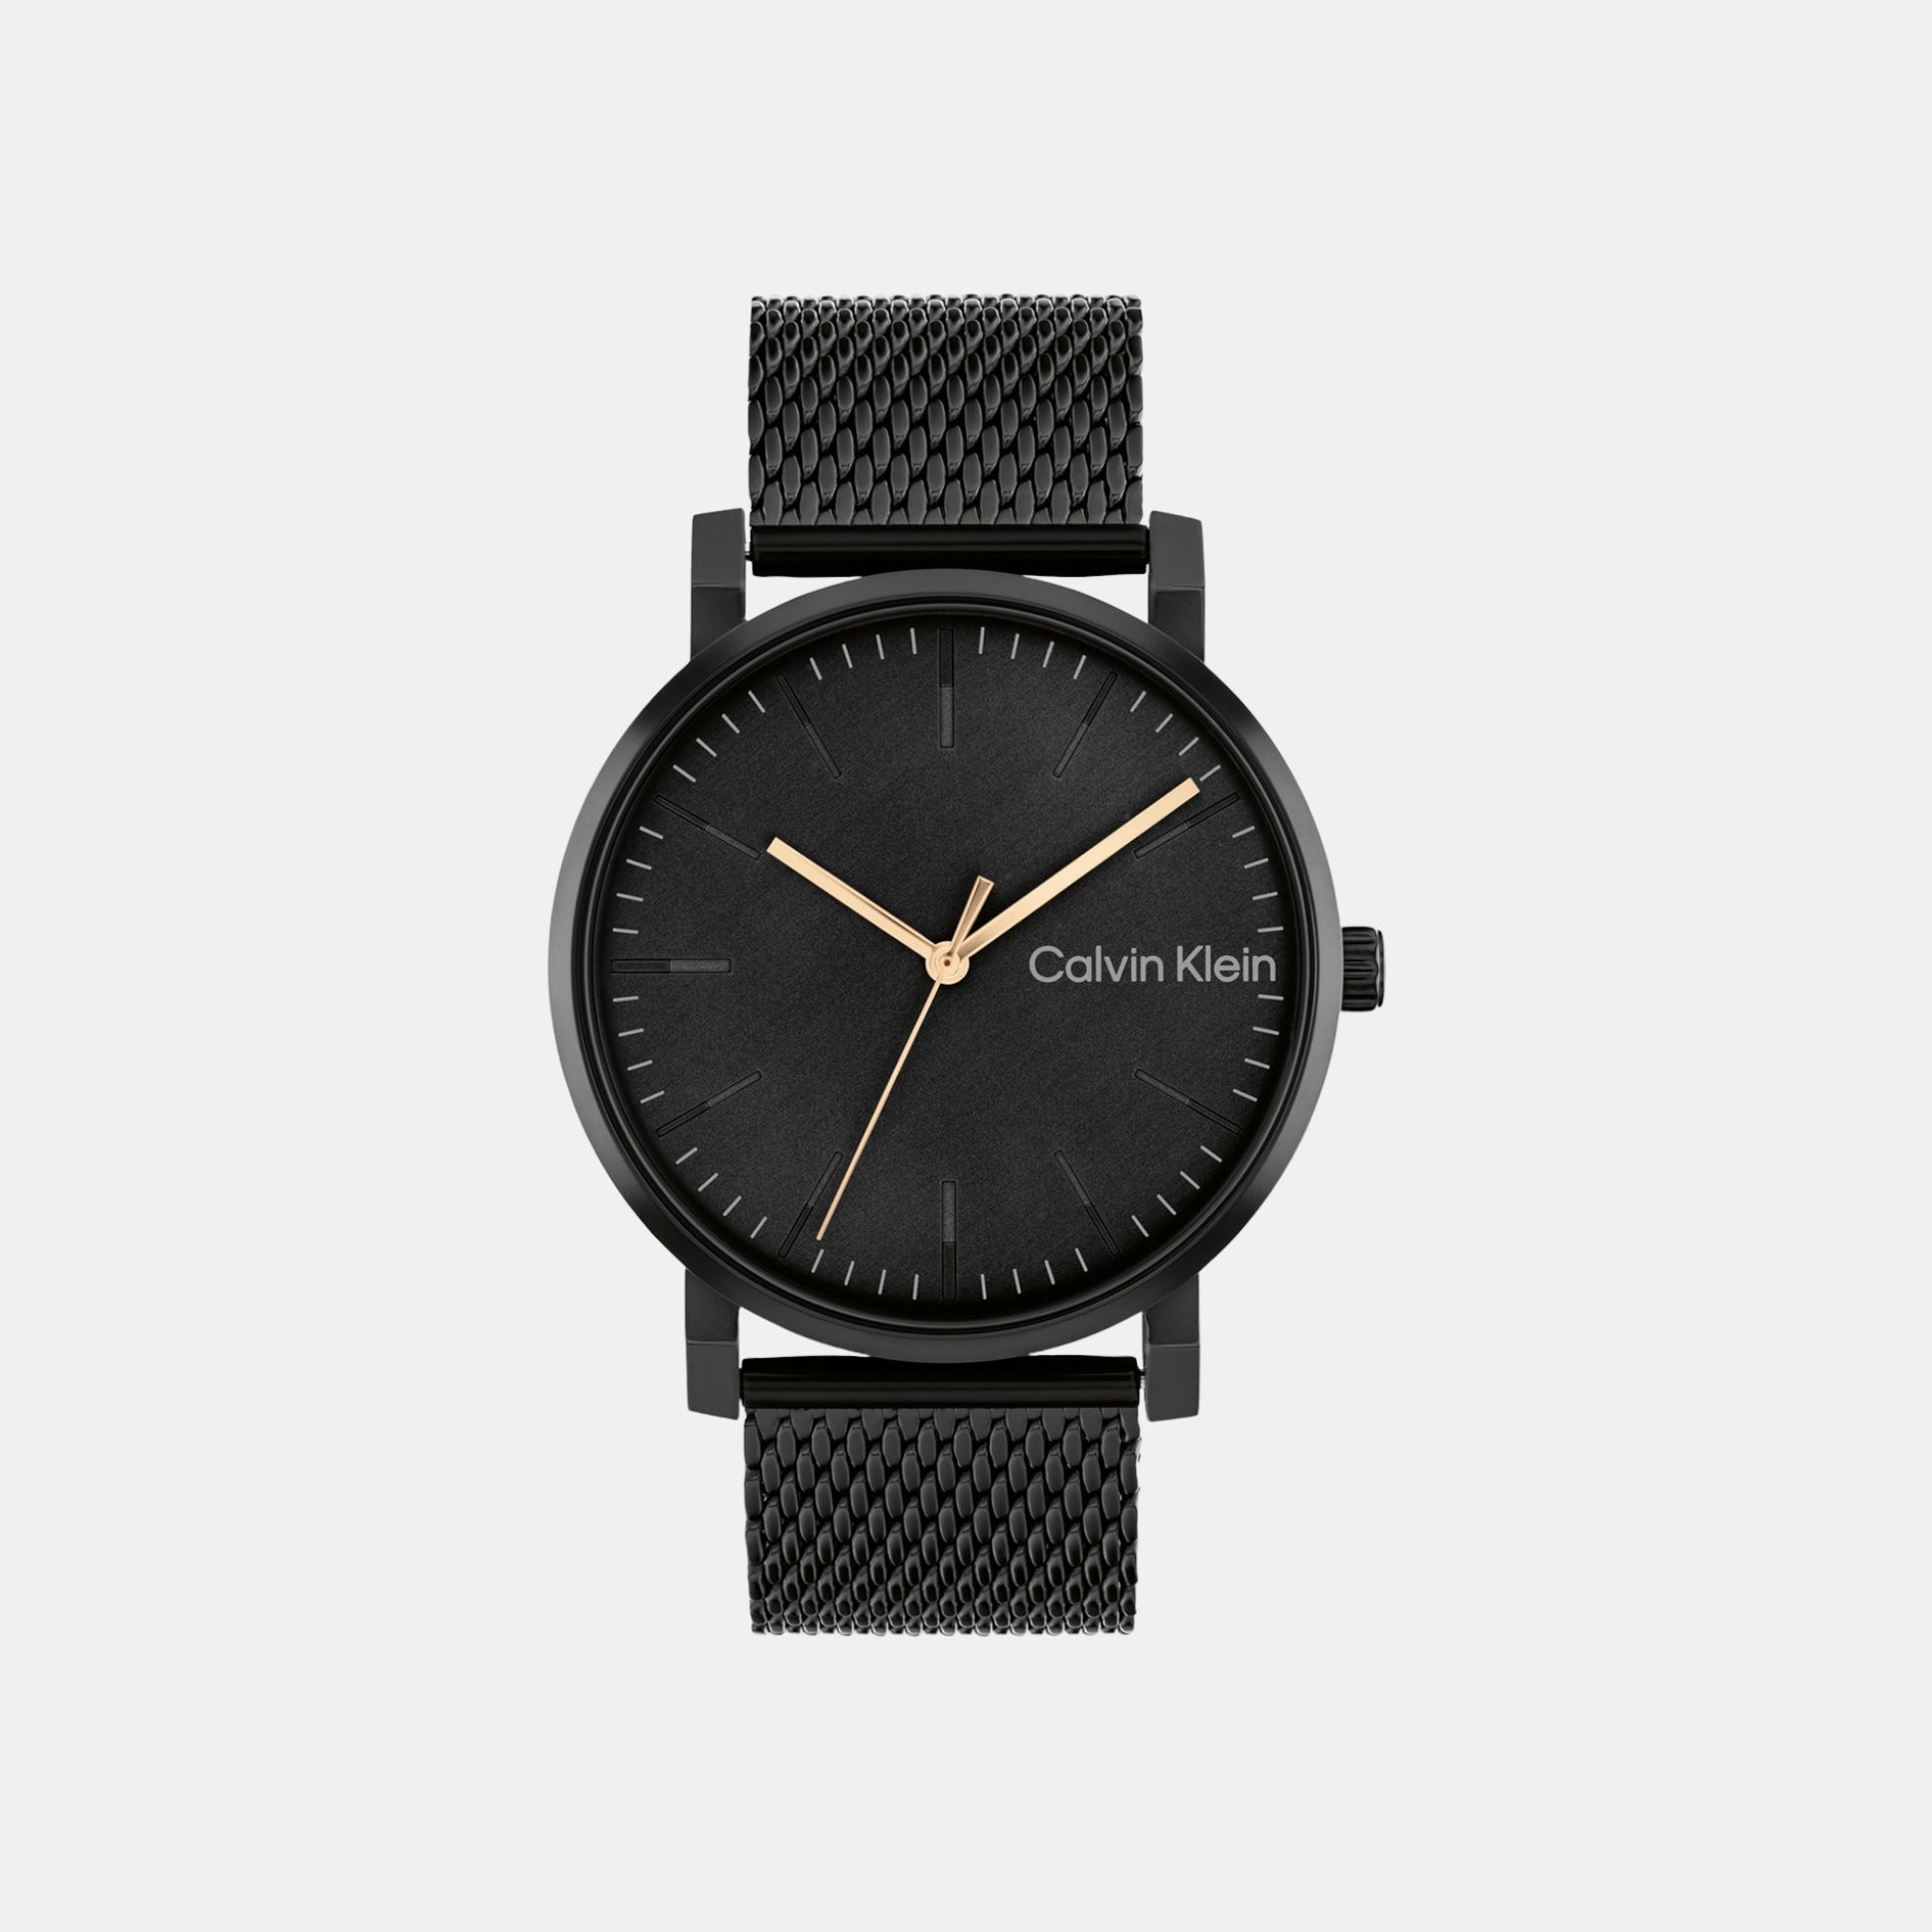 Calvin Klein Male Analog Stainless Steel Watch